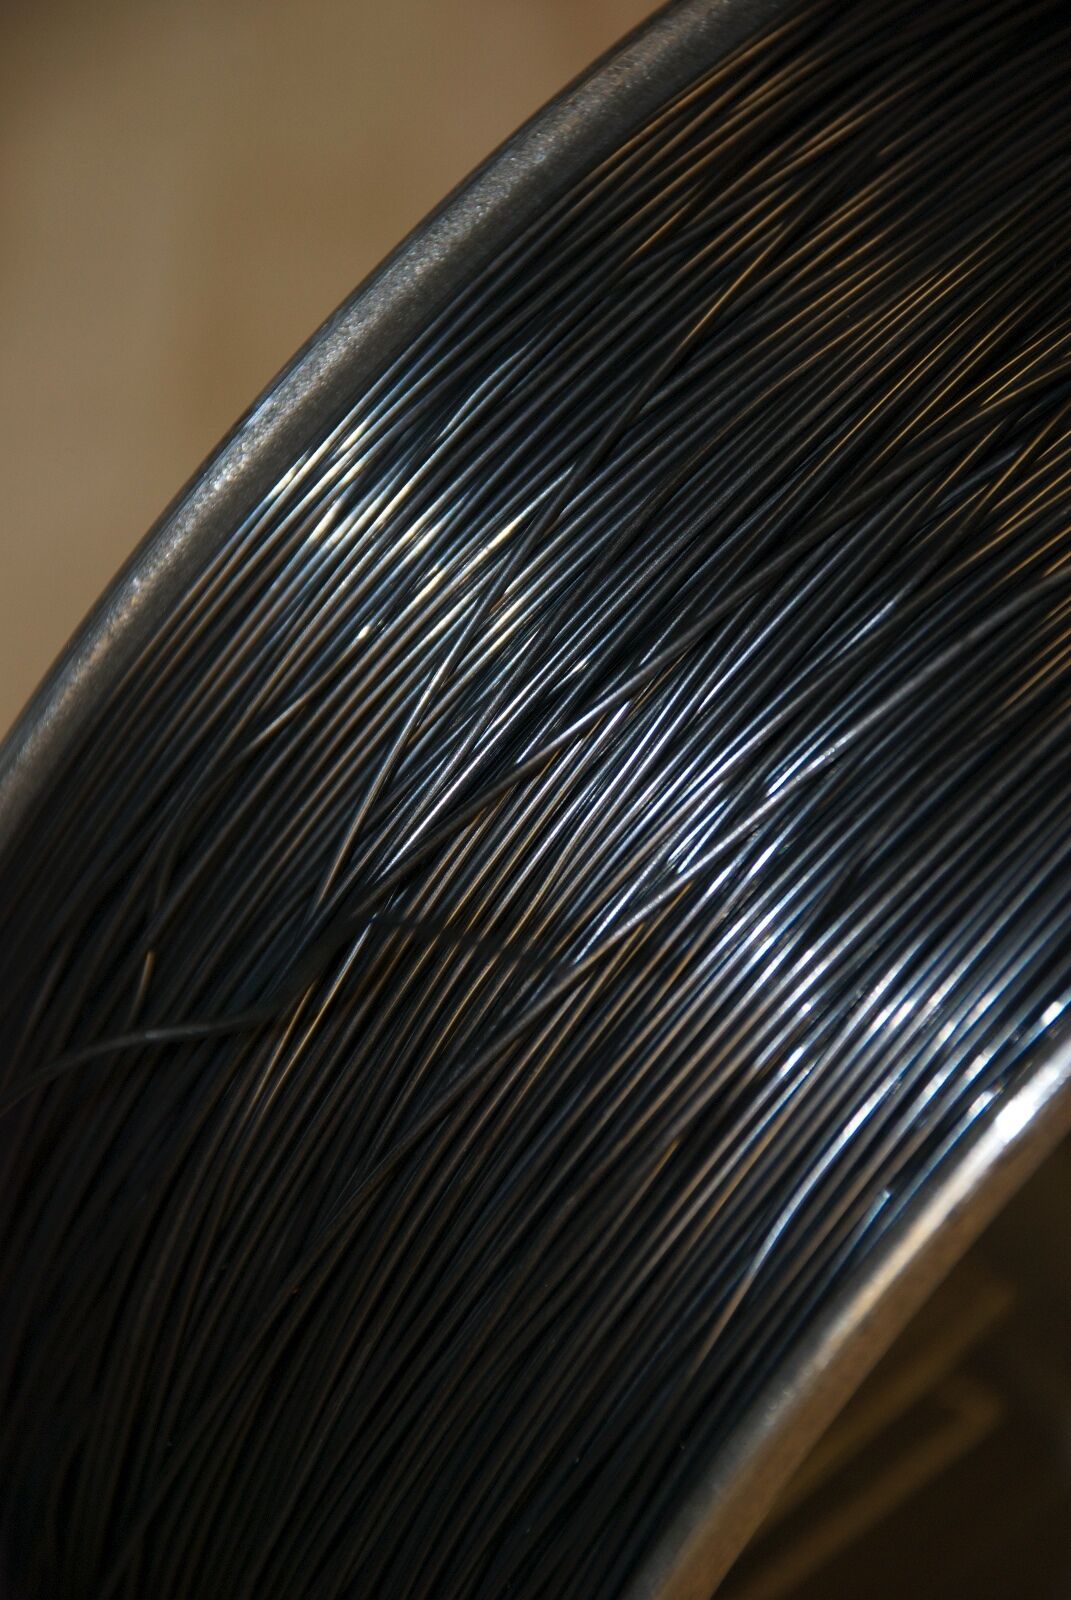 Nitinol NiTi SMA muscle wire Shape Memory Alloy 10 feet 1mm thick 80 ºC (176 ºF)